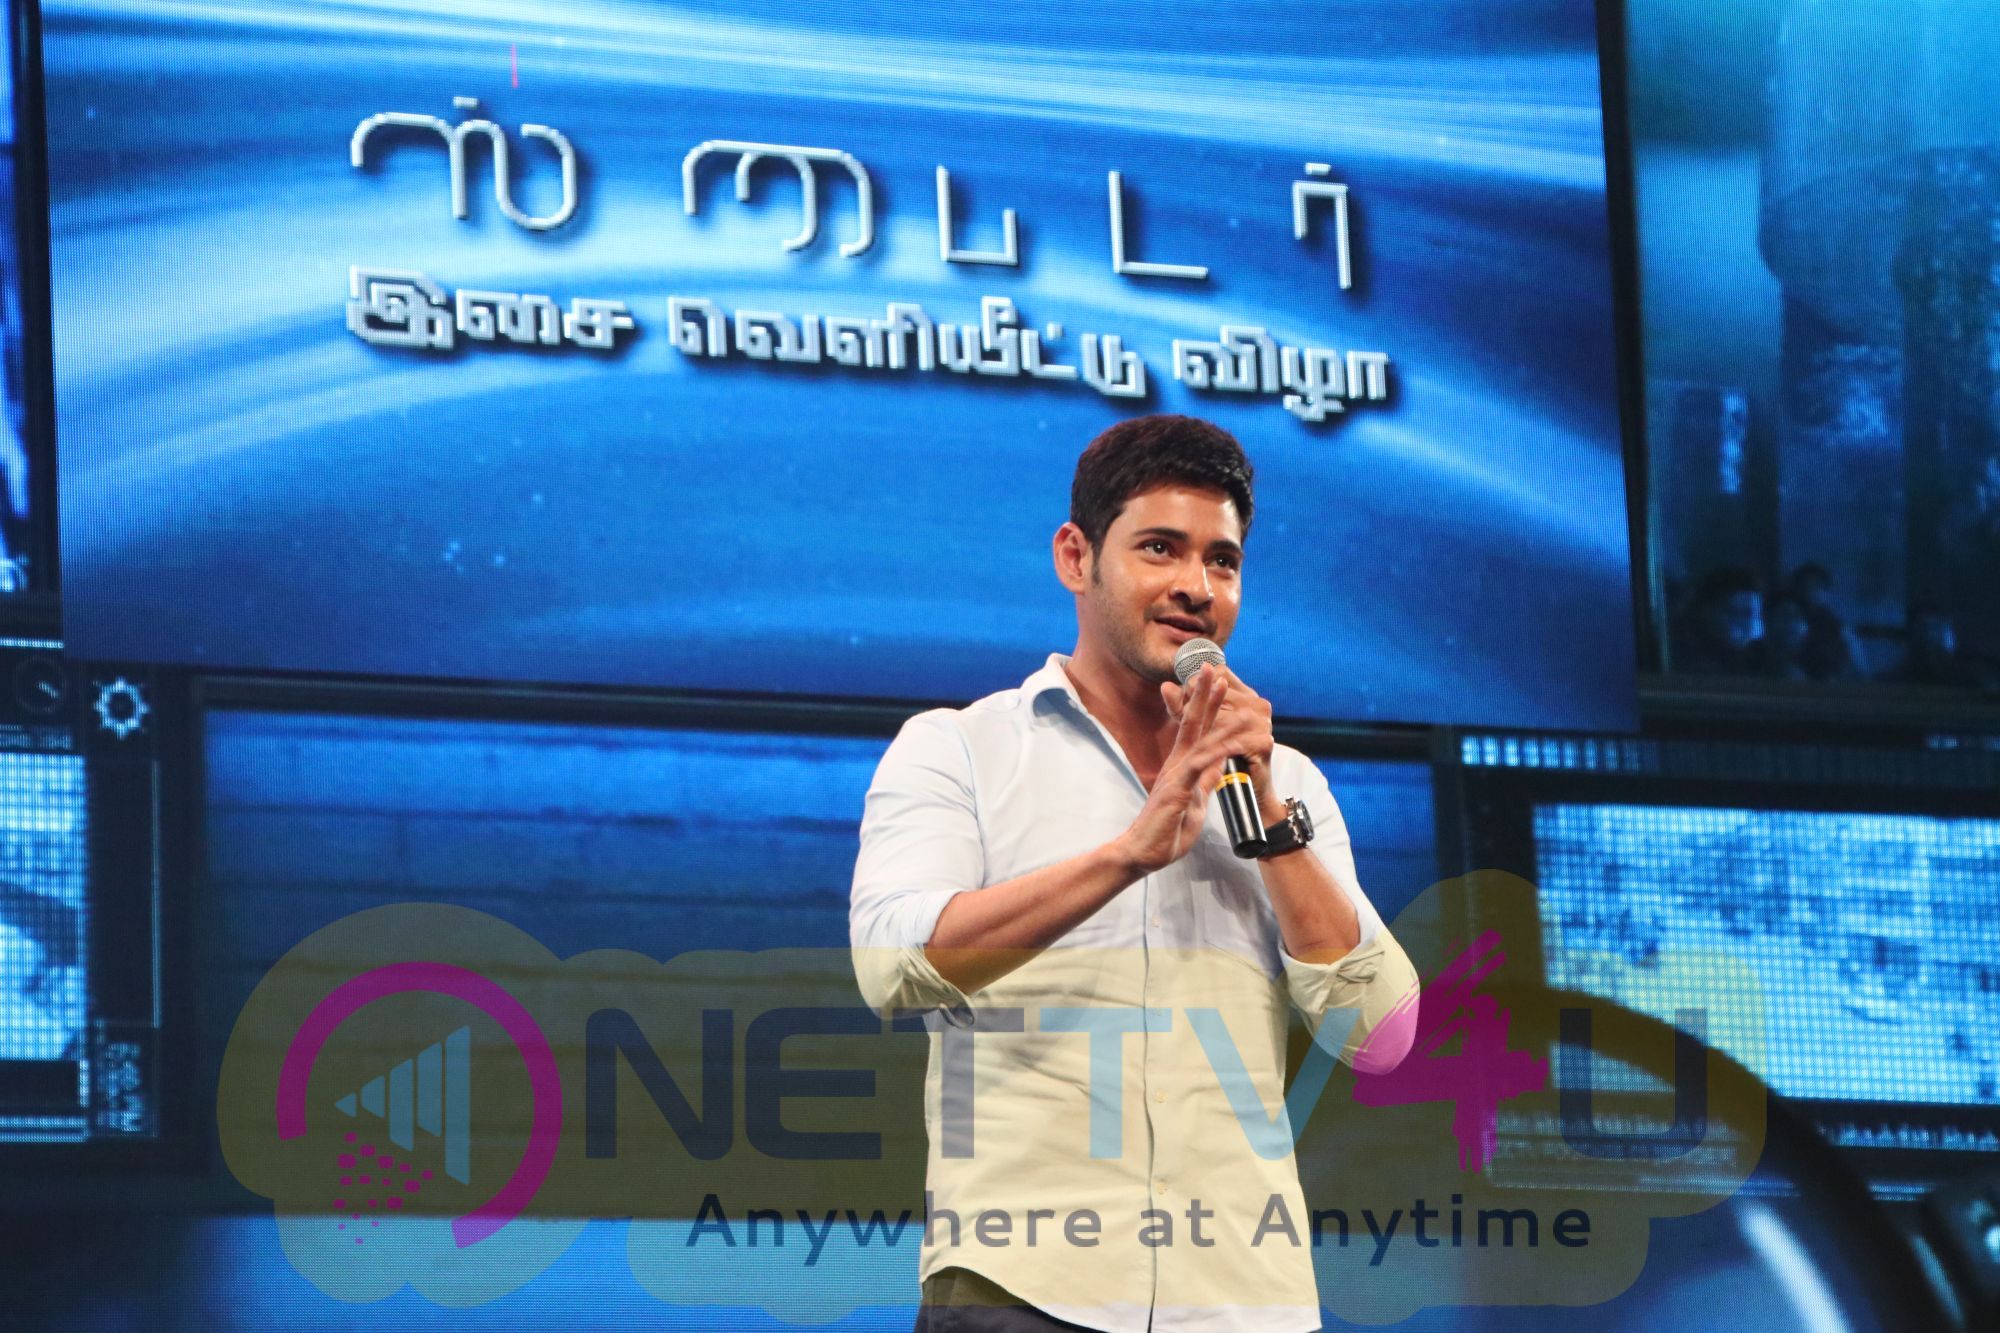 Spyder Movie Audio Launch Pics Tamil Gallery